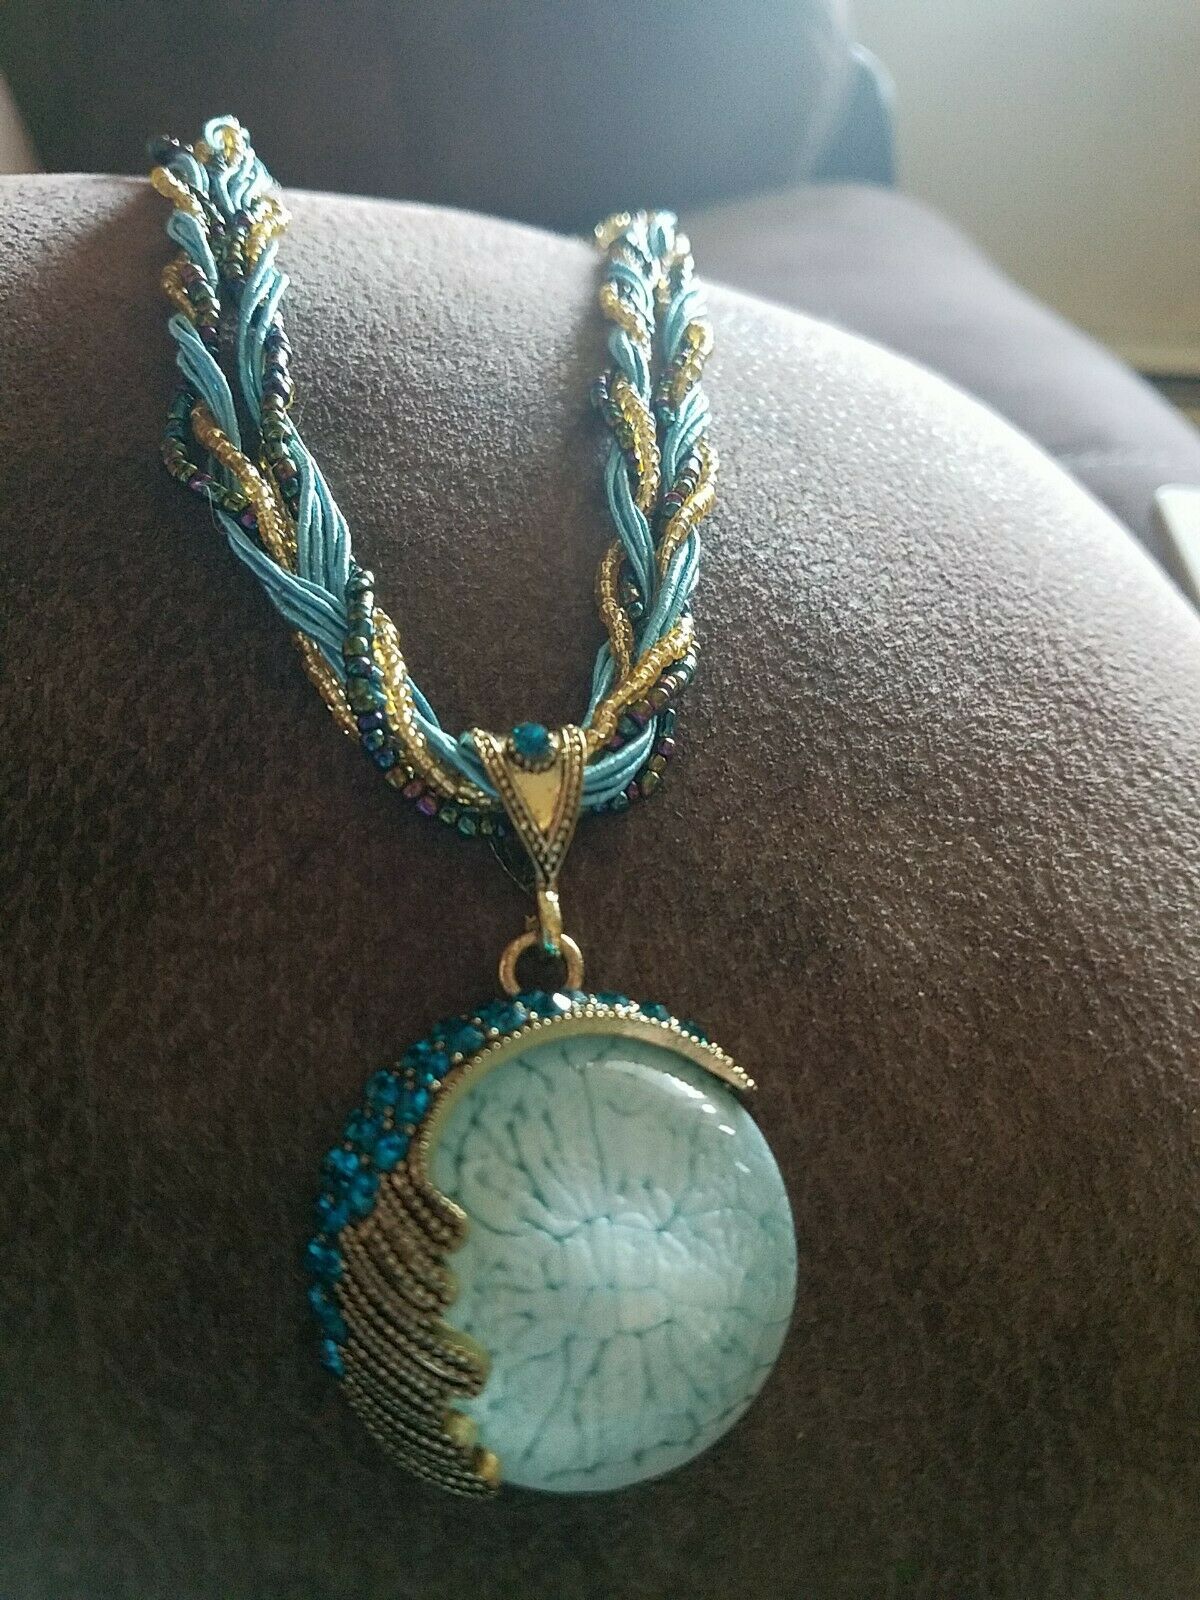 Womens Necklace, Beaded, Rhinestone And Blue Stone. Great Statemental Piece. 16"